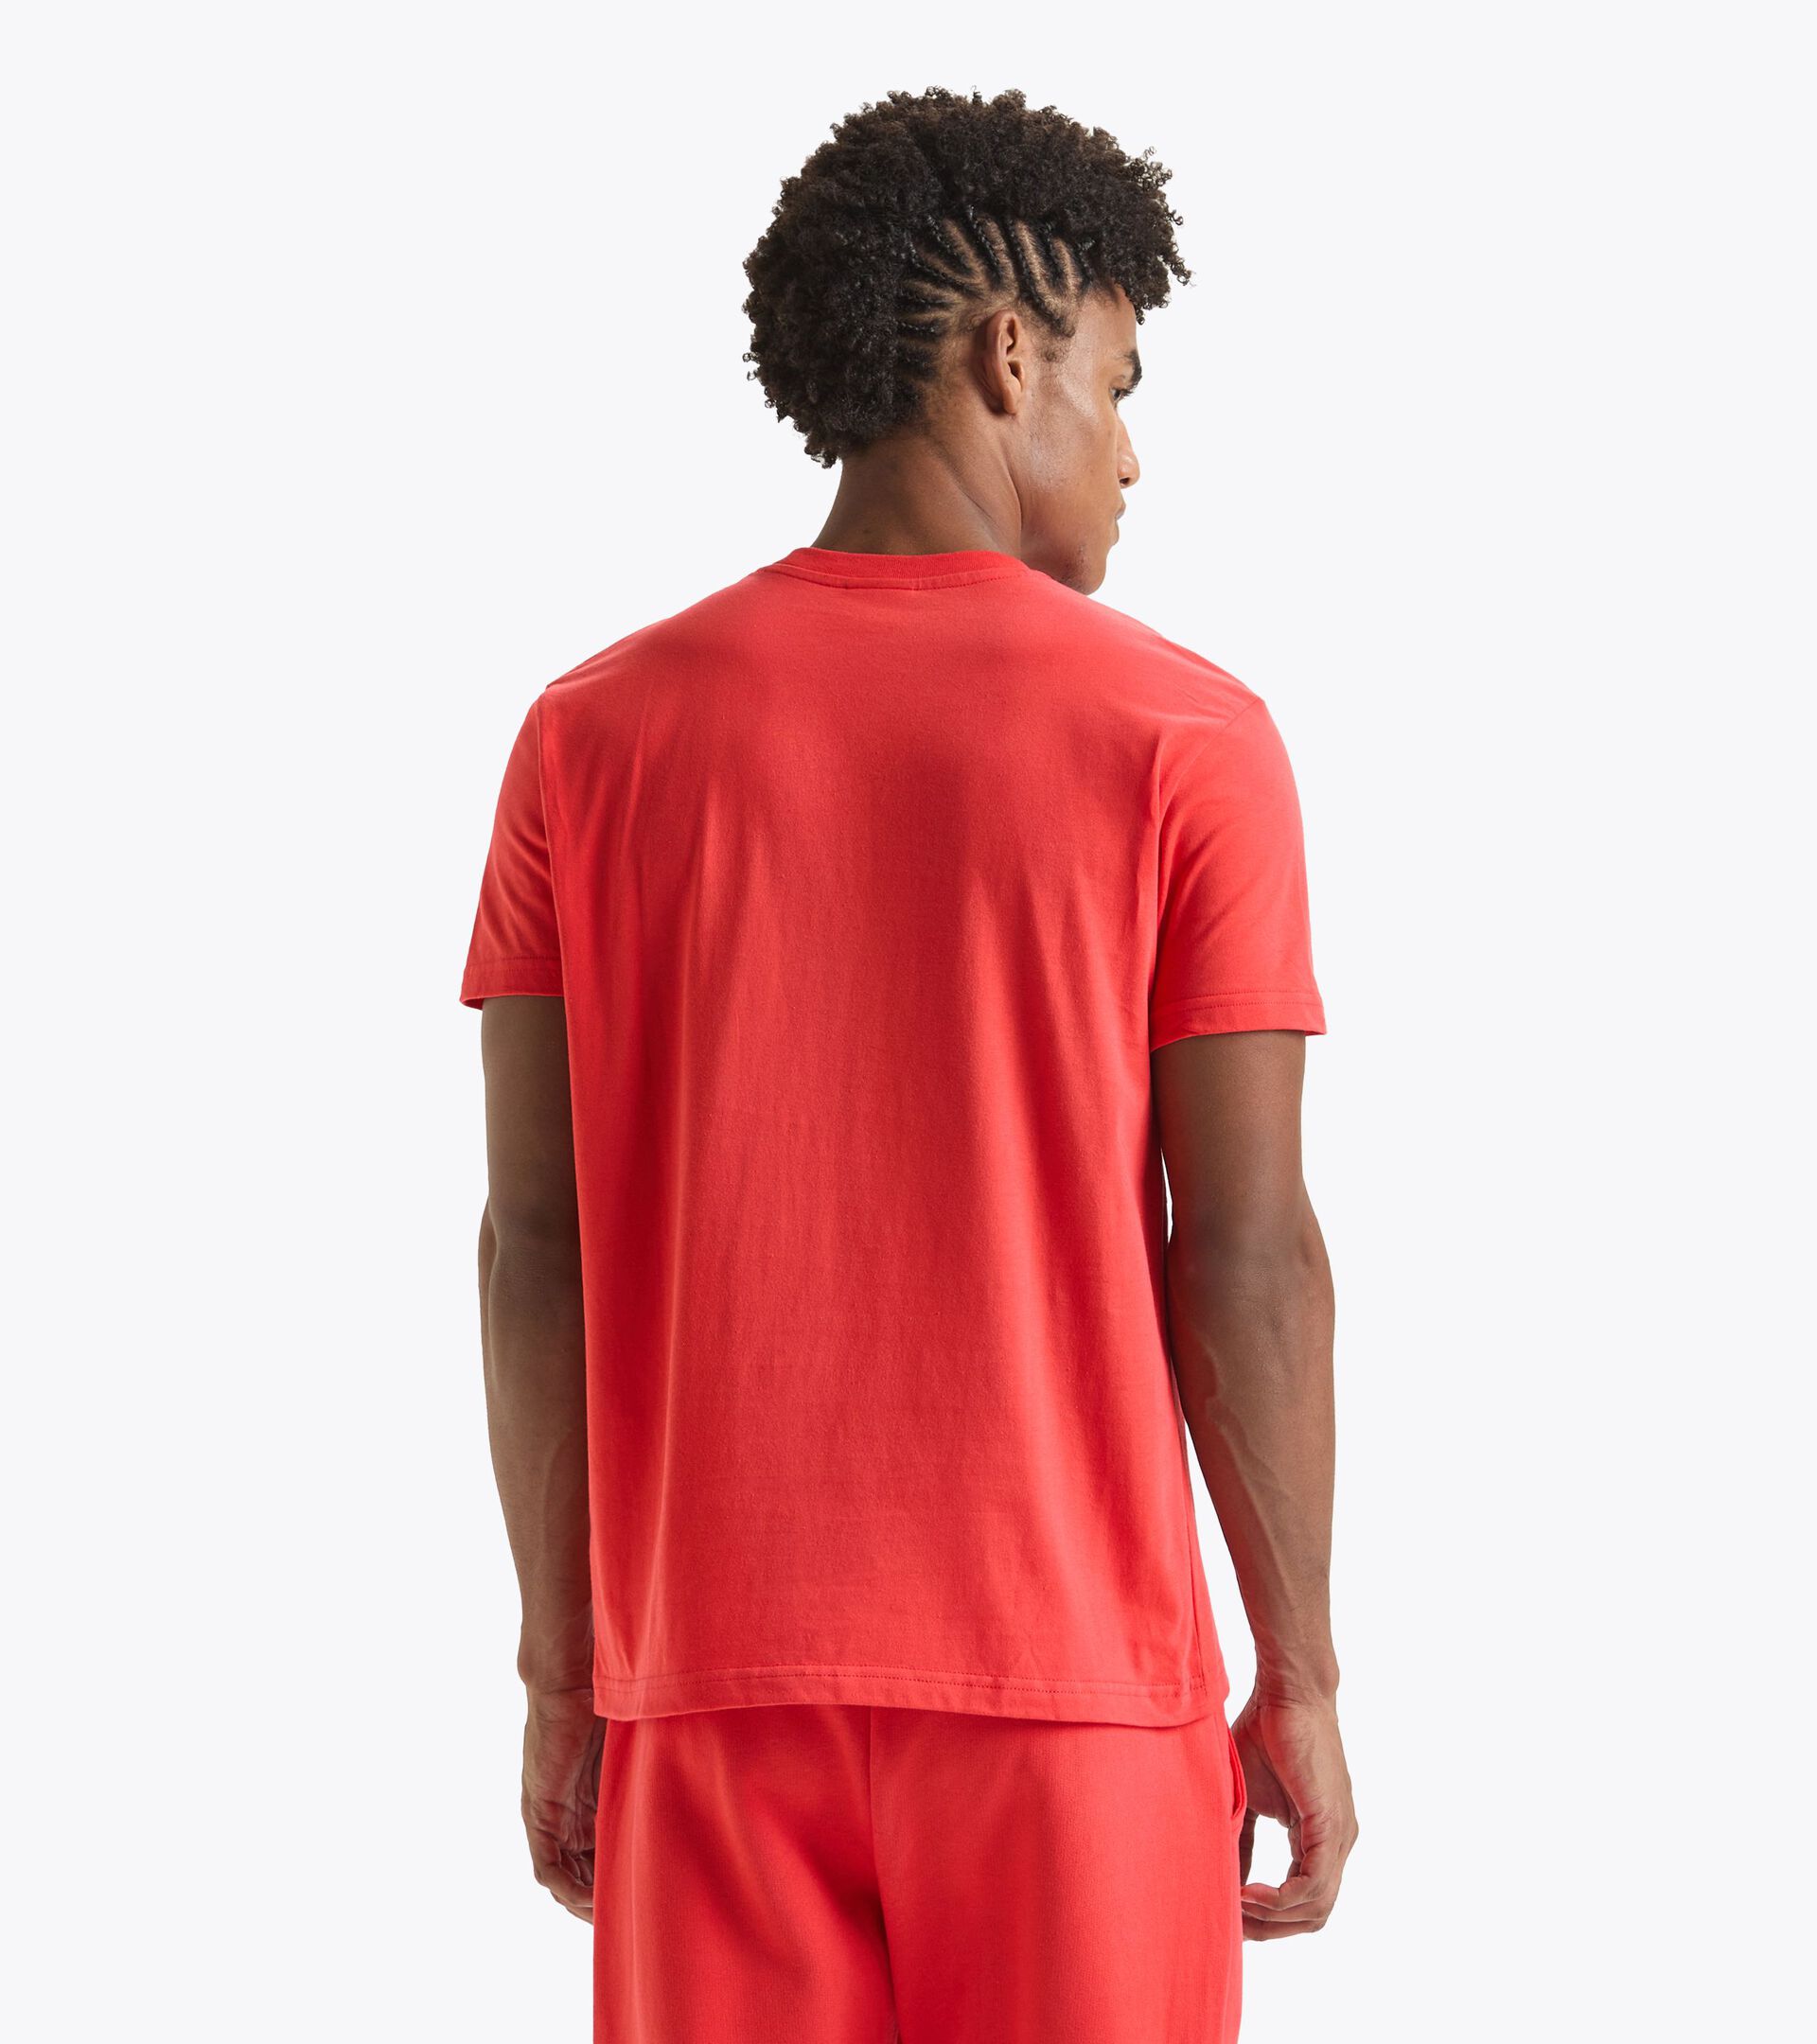 T-shirt - Made in Italy - Gender Neutral T-SHIRT SS LOGO BITTERSWEET RED - Diadora